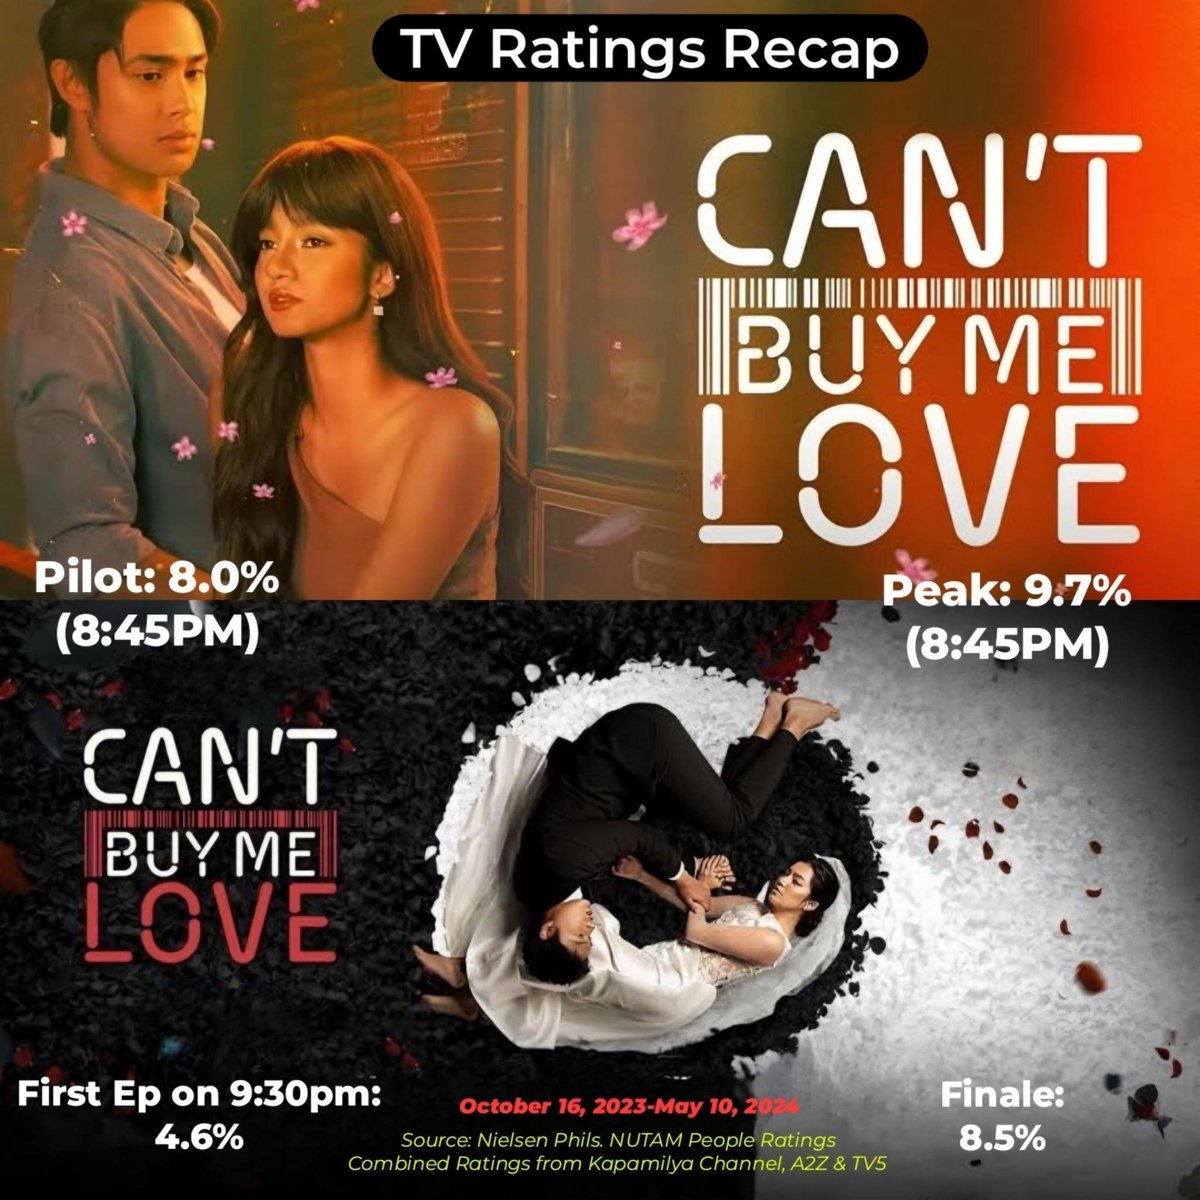 #CantBuyMeLove TV Ratings Recap
Source: Nielsen Phils. NUTAM People Ratings